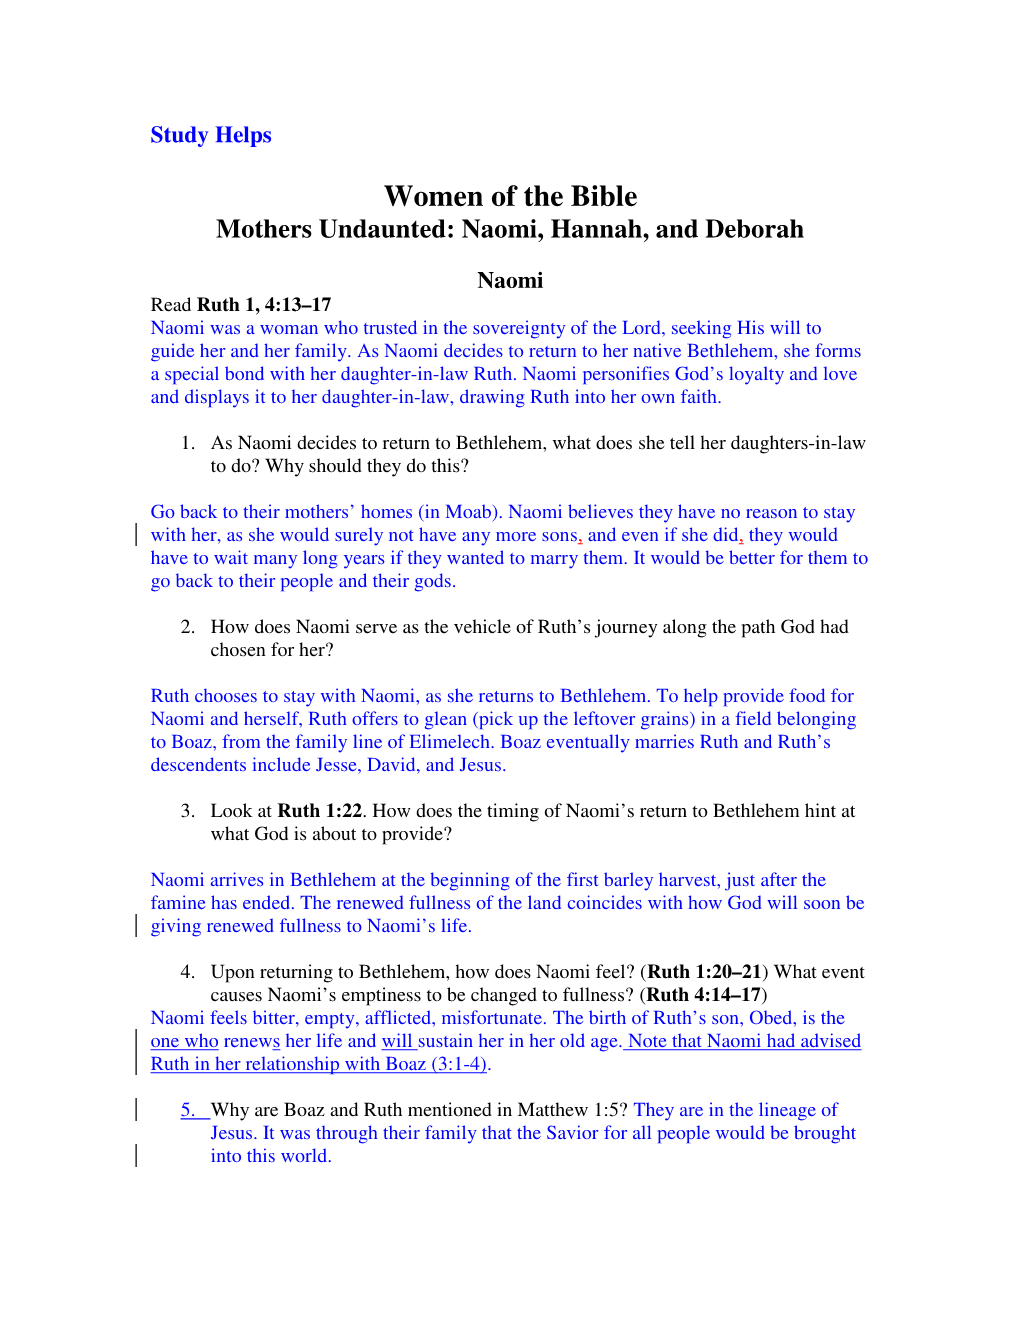 Women of the Bible Mothers Undaunted: Naomi, Hannah, and Deborah